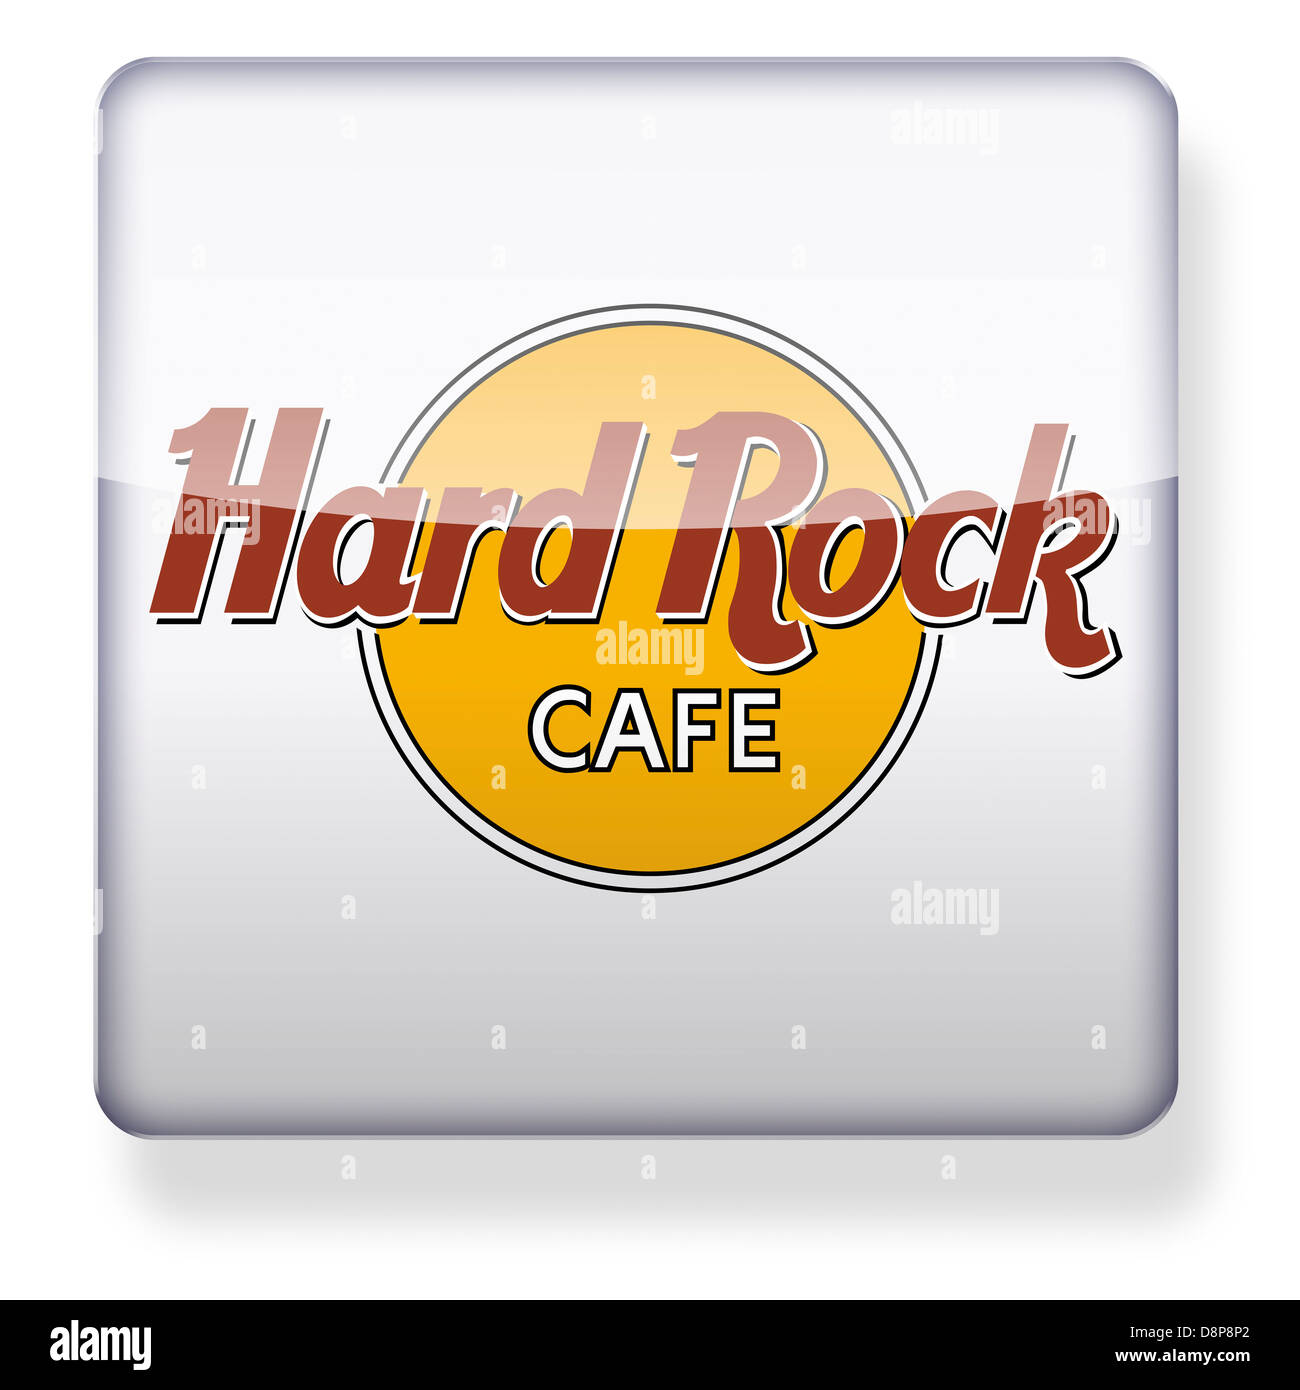 Hard rock café logo -Fotos und -Bildmaterial in hoher Auflösung – Alamy